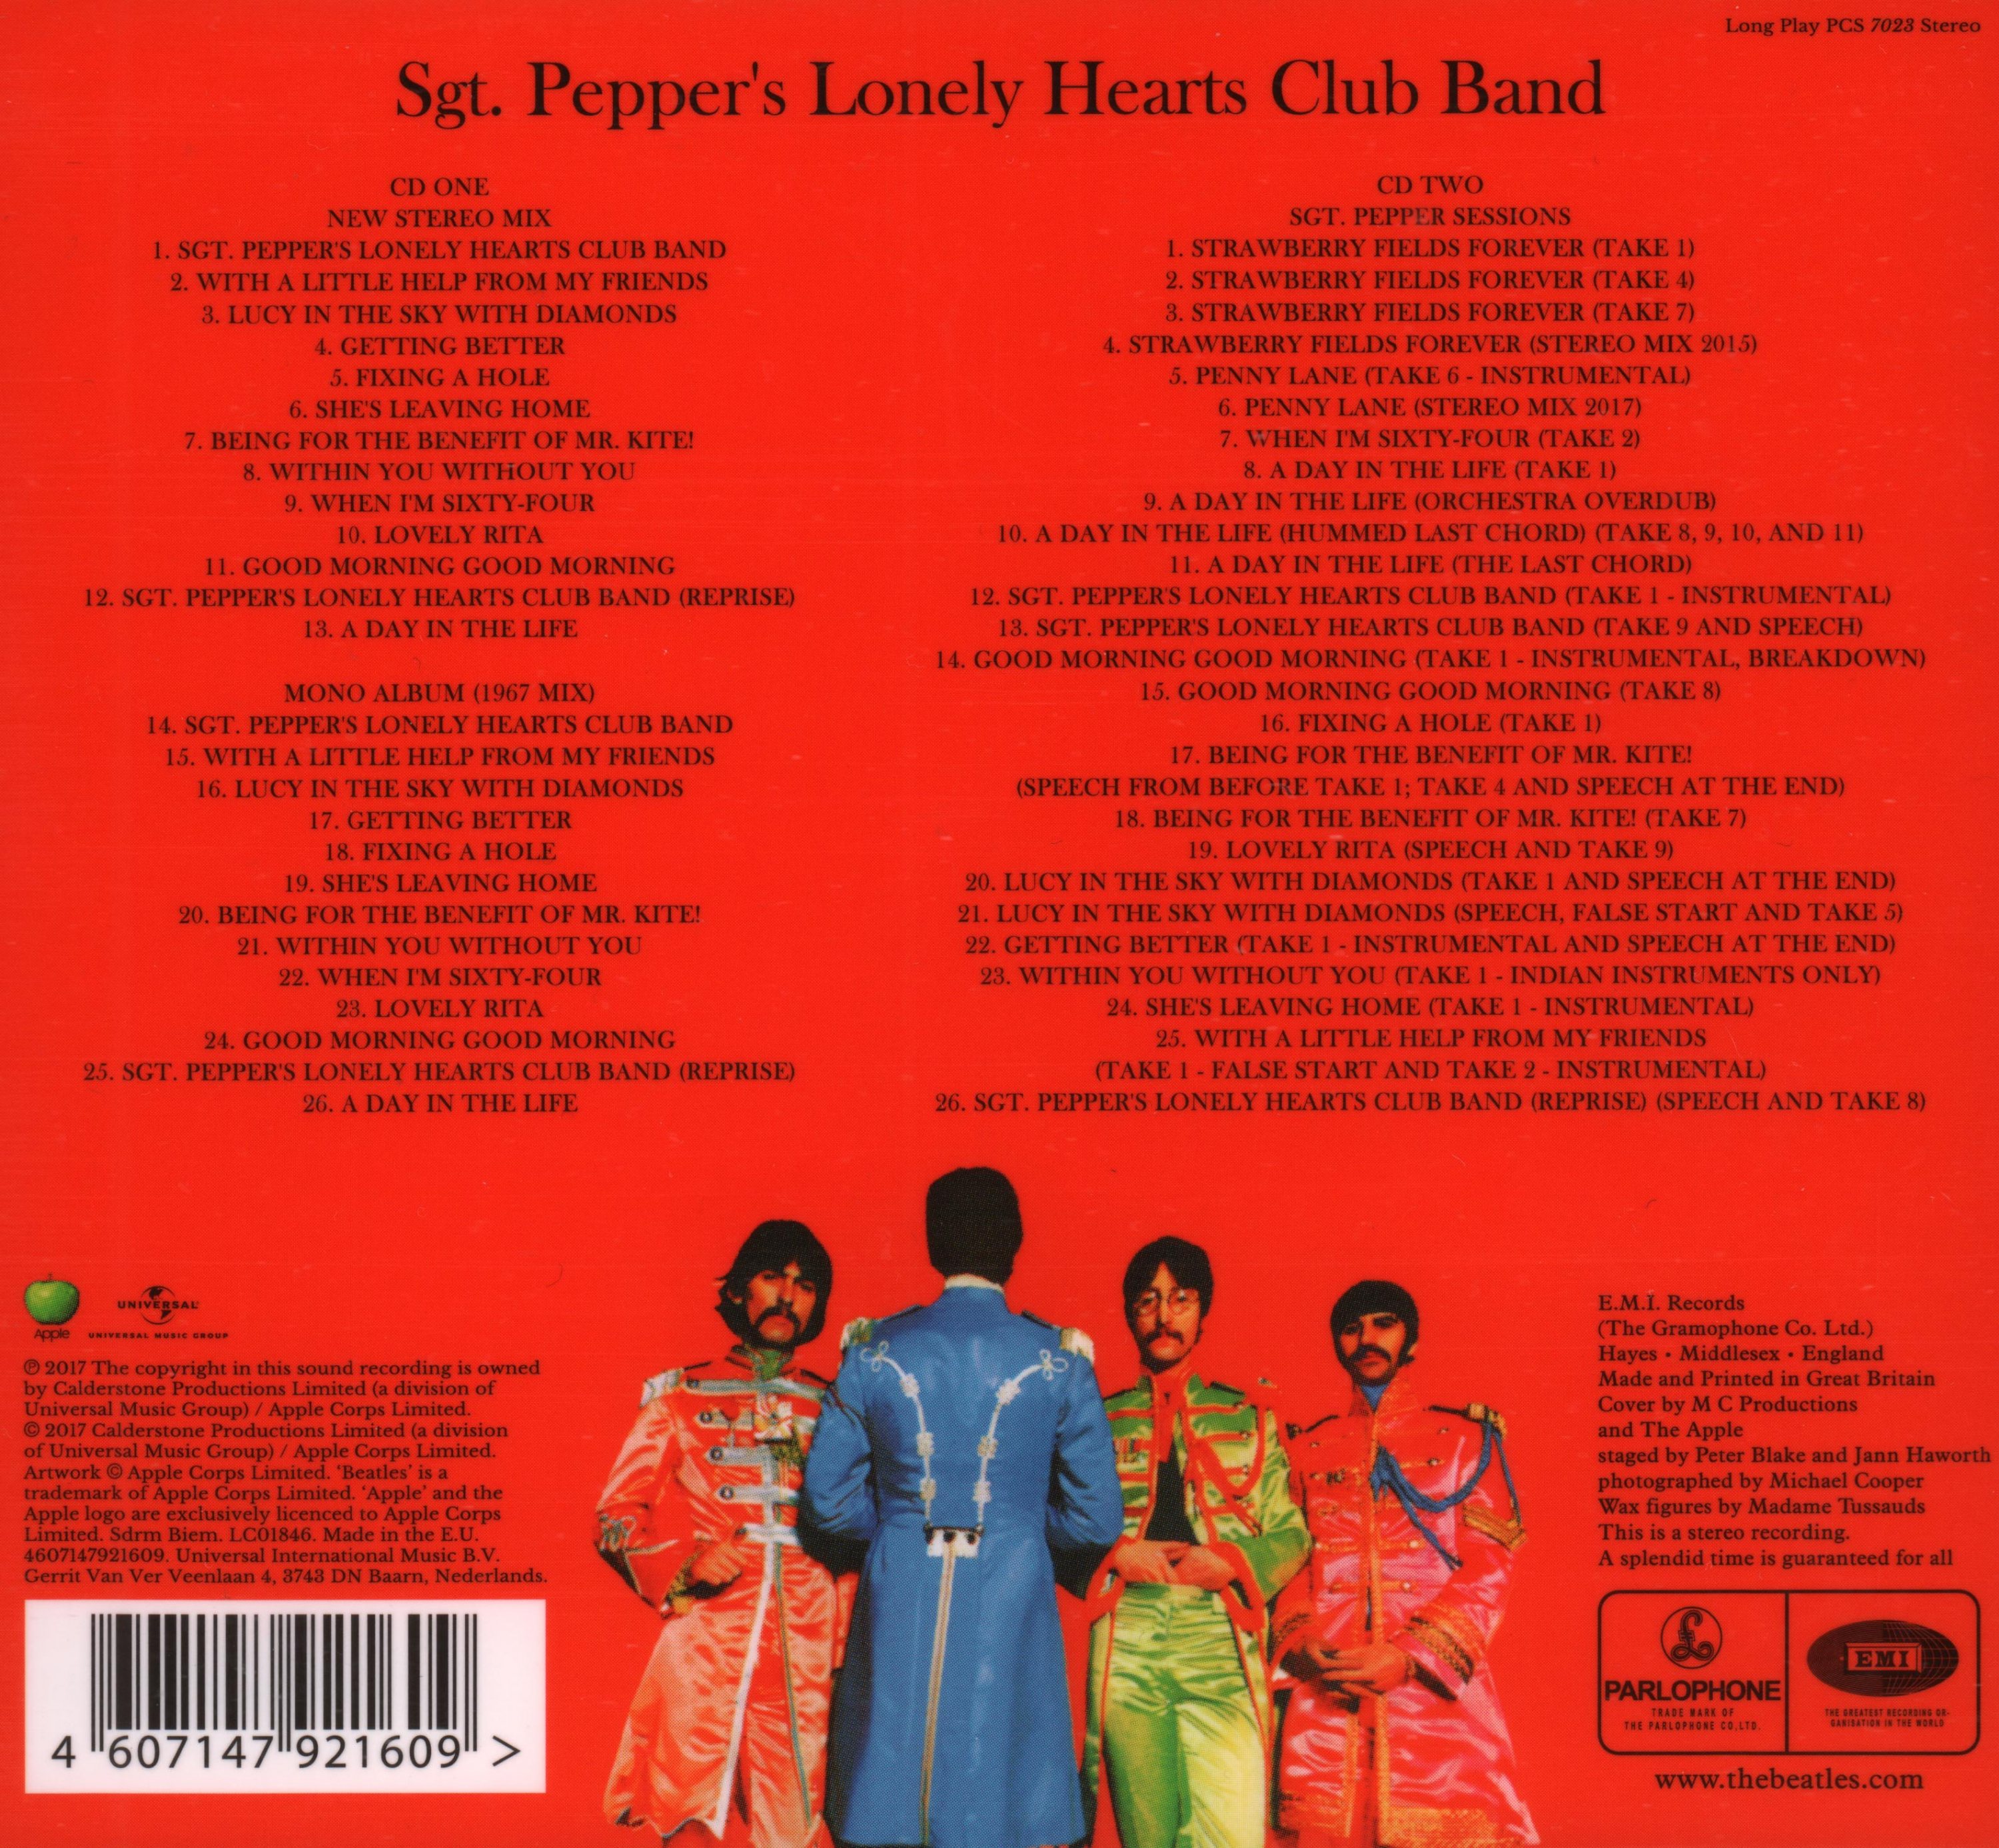 Mp3 pepper. Beatles Sergeant Pepper's Lonely Hearts Club Band. The Beatles Sgt Pepper оркестр 1967. Обложке пластинки Sgt. Pepper's Lonely Hearts Club Band (1967 г.).. Cover Sgt. Pepper`s Lonely Hearts Club Band (1967).